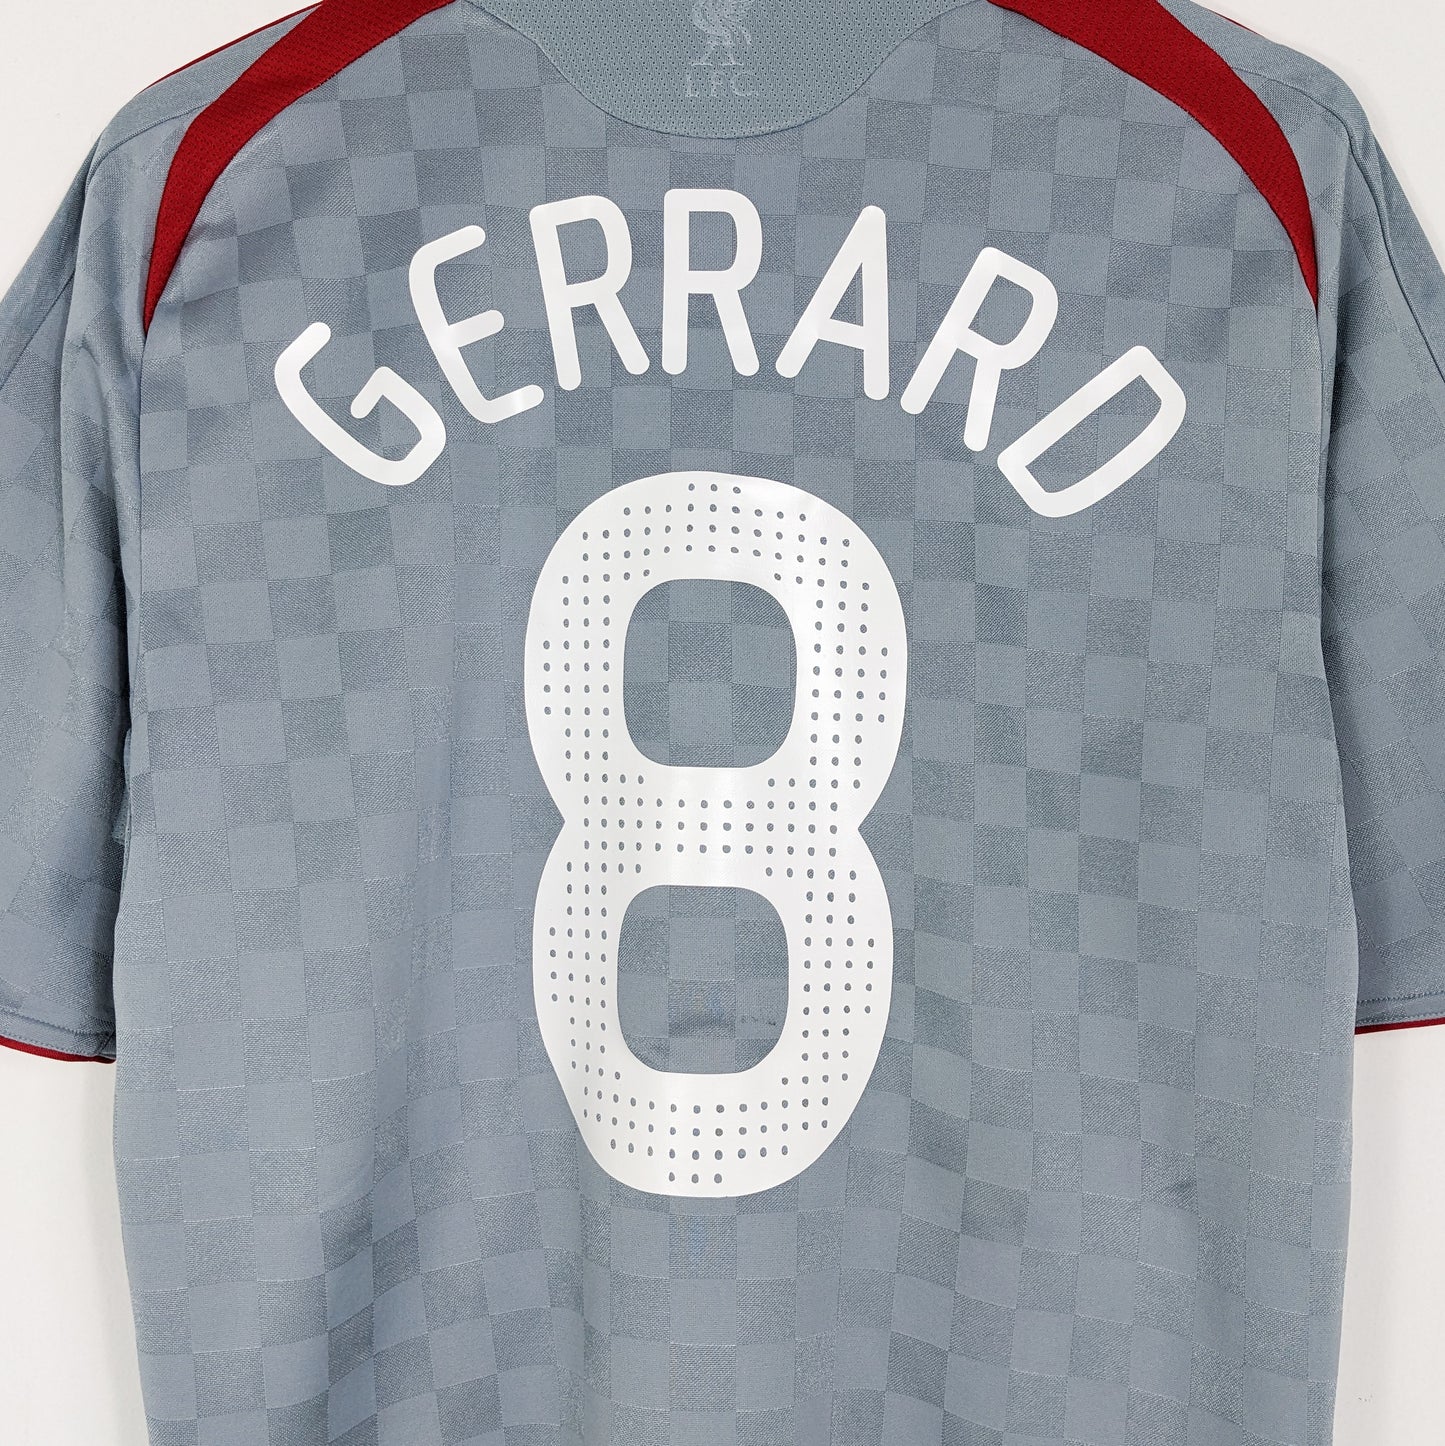 Authentic Liverpool 2008/2009 Away - Gerrard #8 Size M